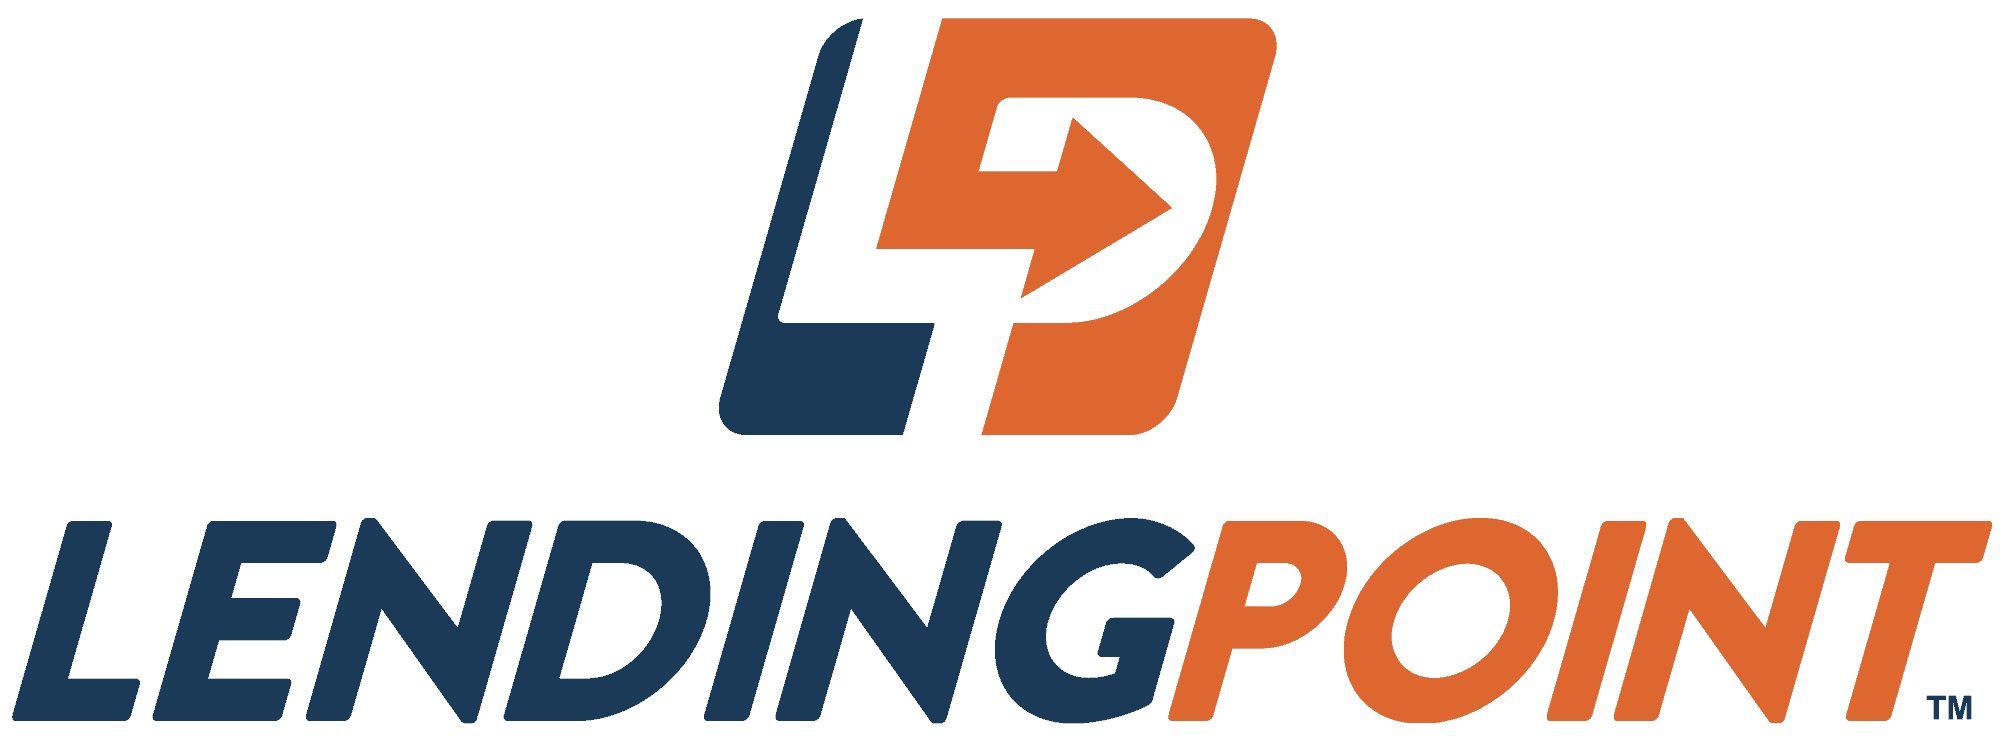 LendingPoint标志